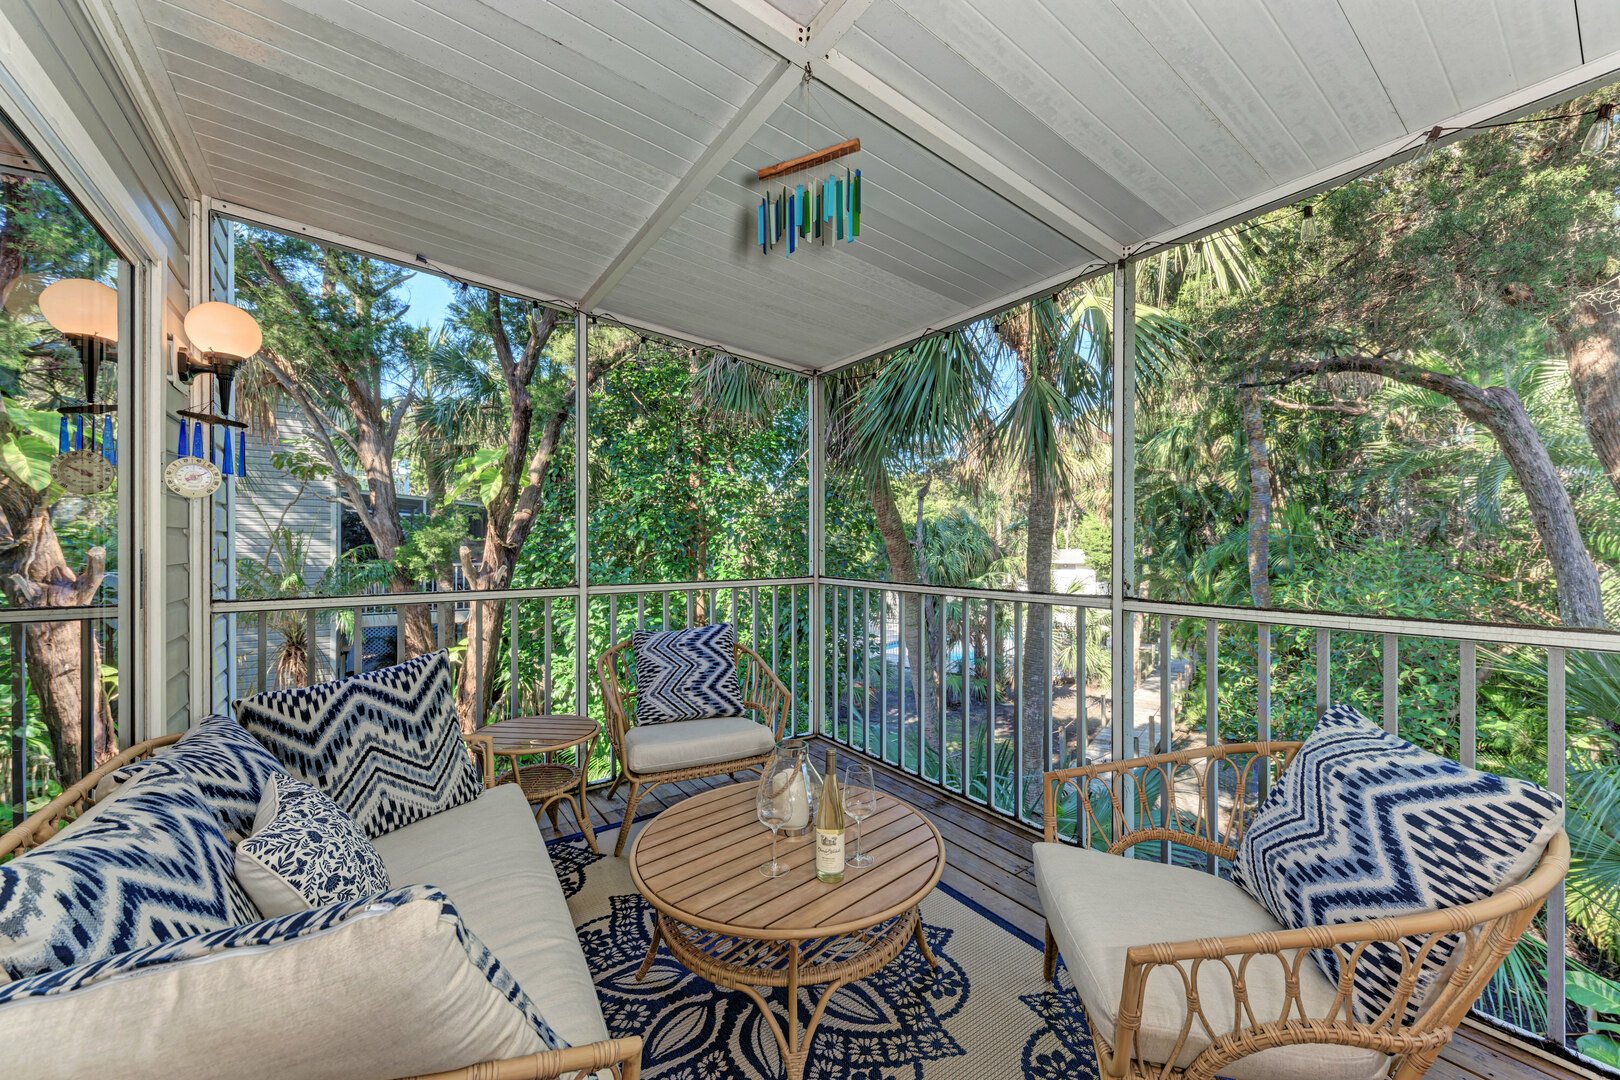 Island Serenity screened in balcony patio furniture